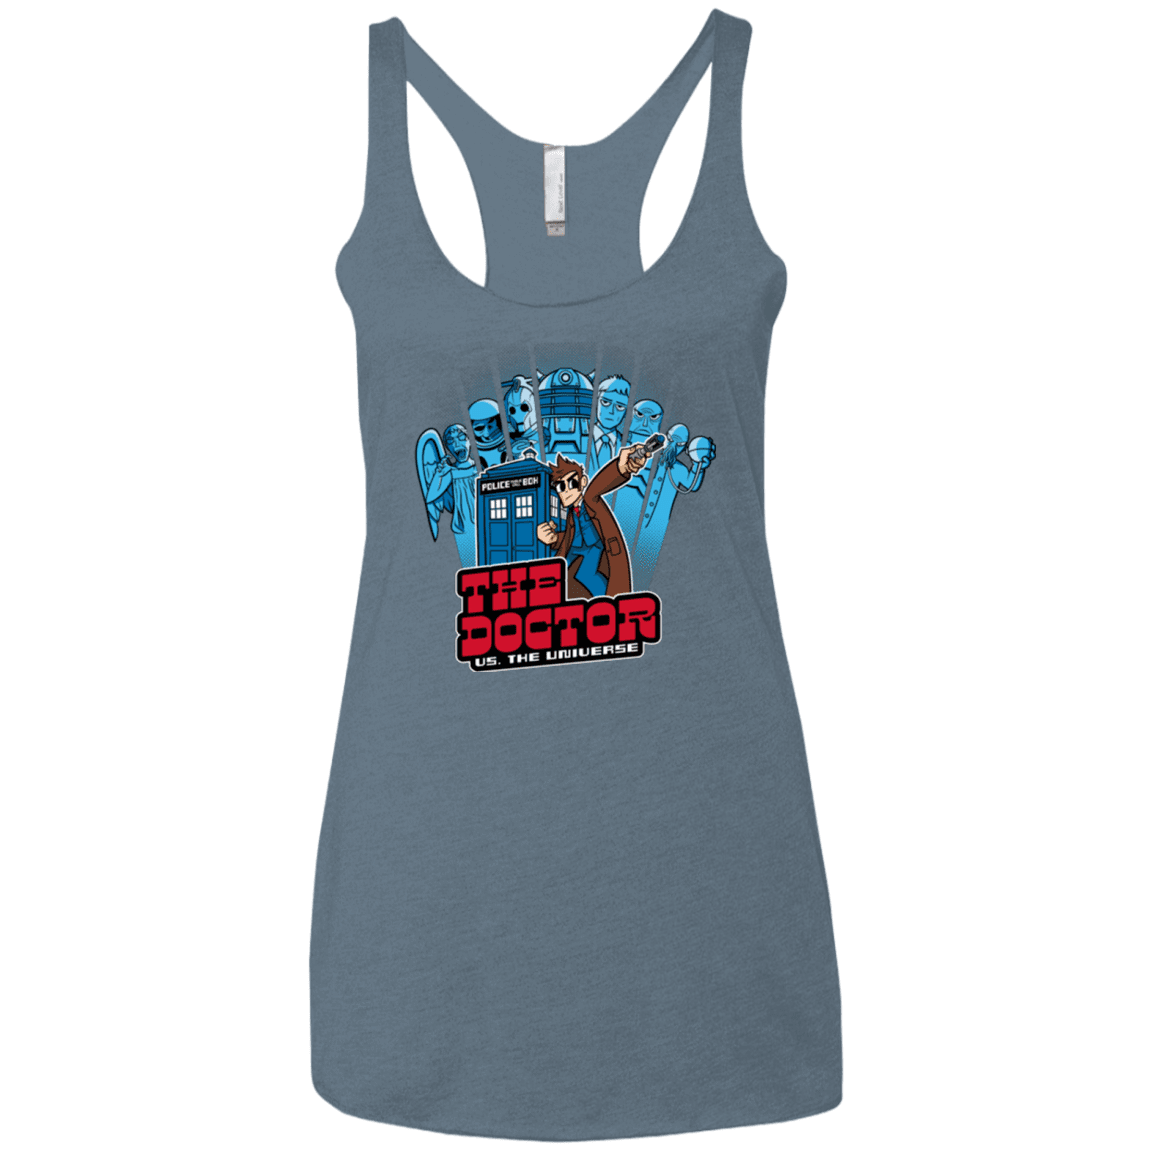 T-Shirts Indigo / X-Small 10 vs universe Women's Triblend Racerback Tank